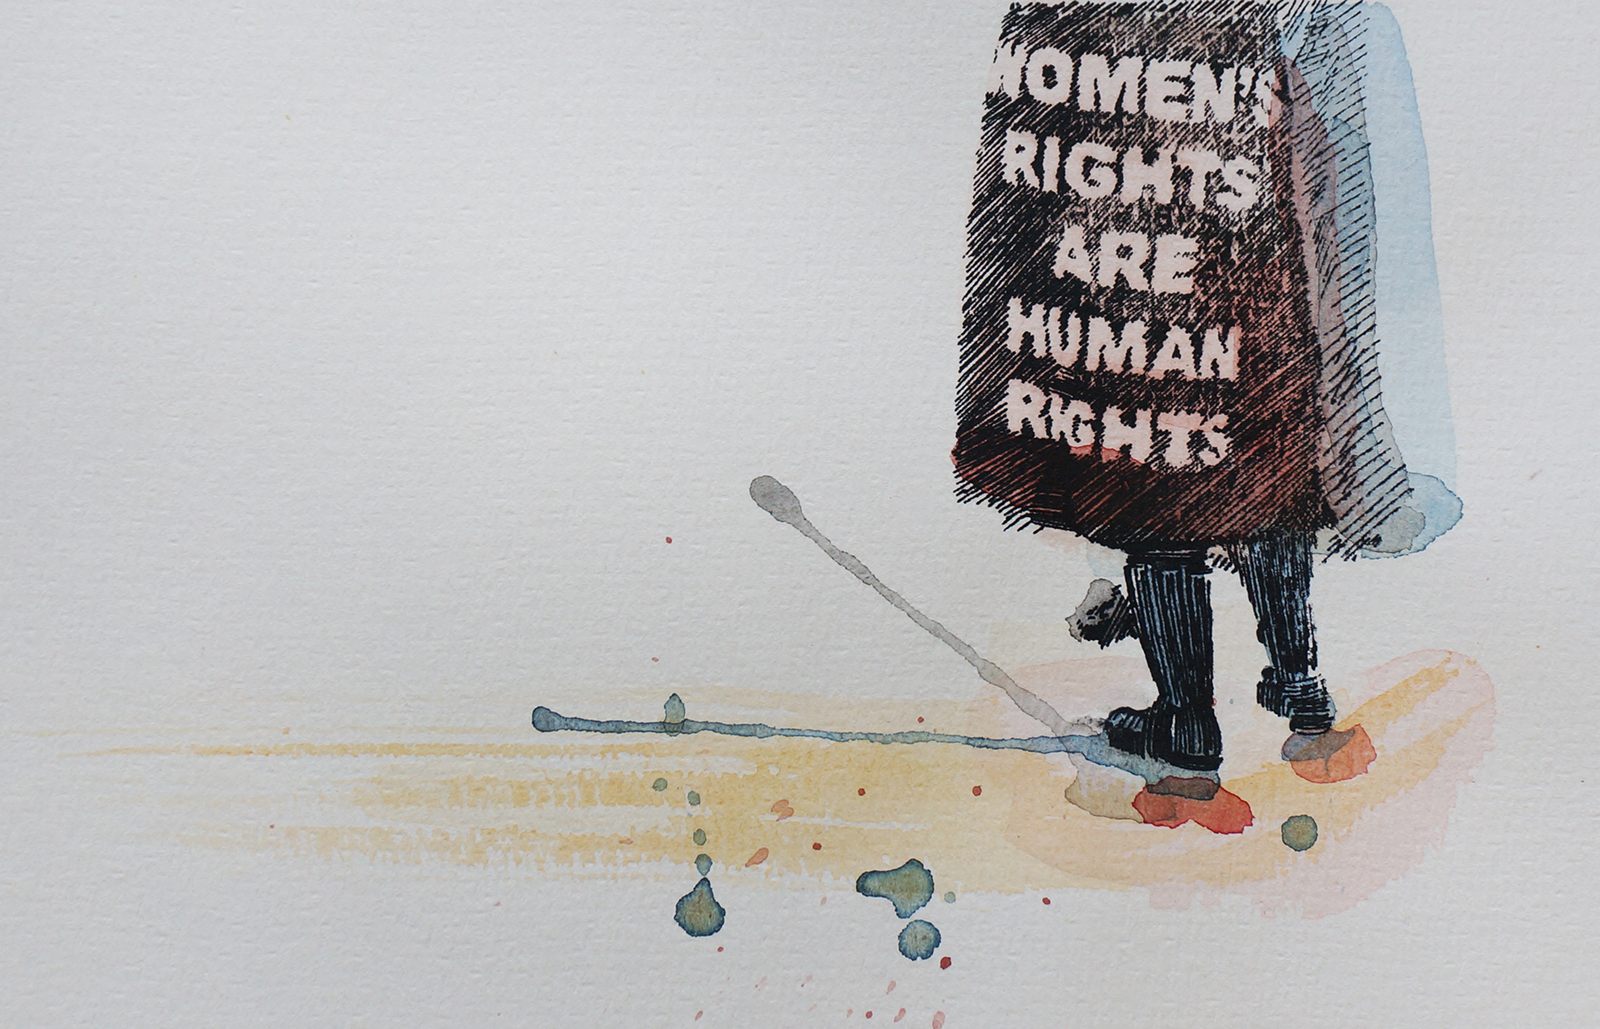 Ape_Bleakney_March Mixed Media - 'Women's Rights (4)', 6.5''x9.5'', Screen Print + Watercolor, 2018.jpg